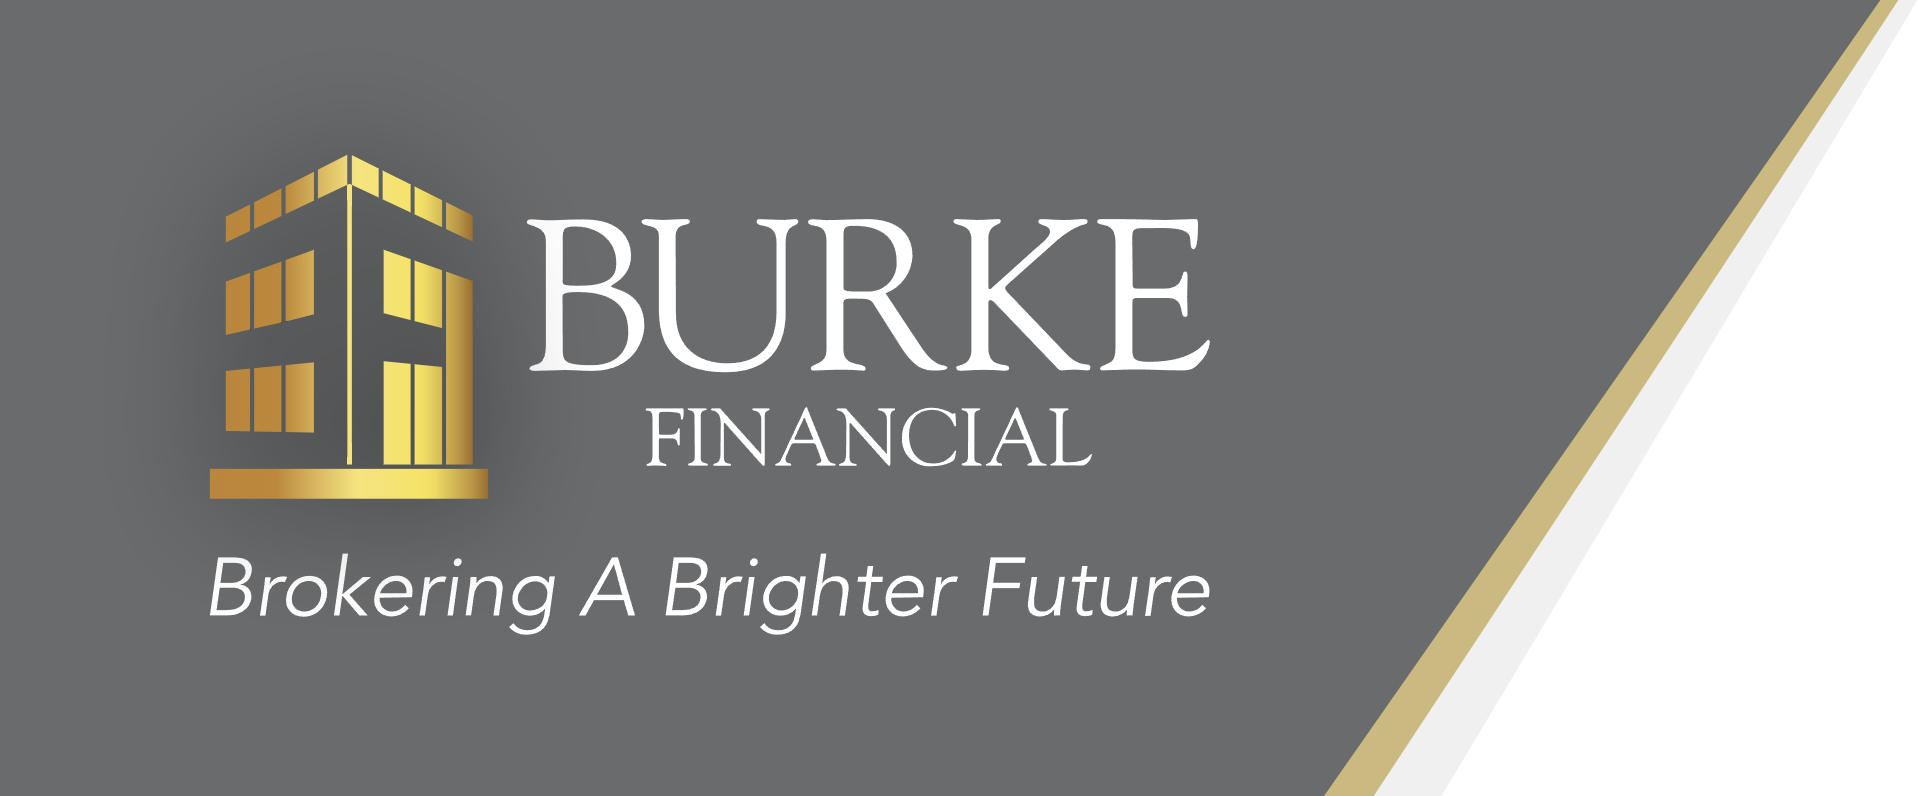 Burke Financial Brokerage